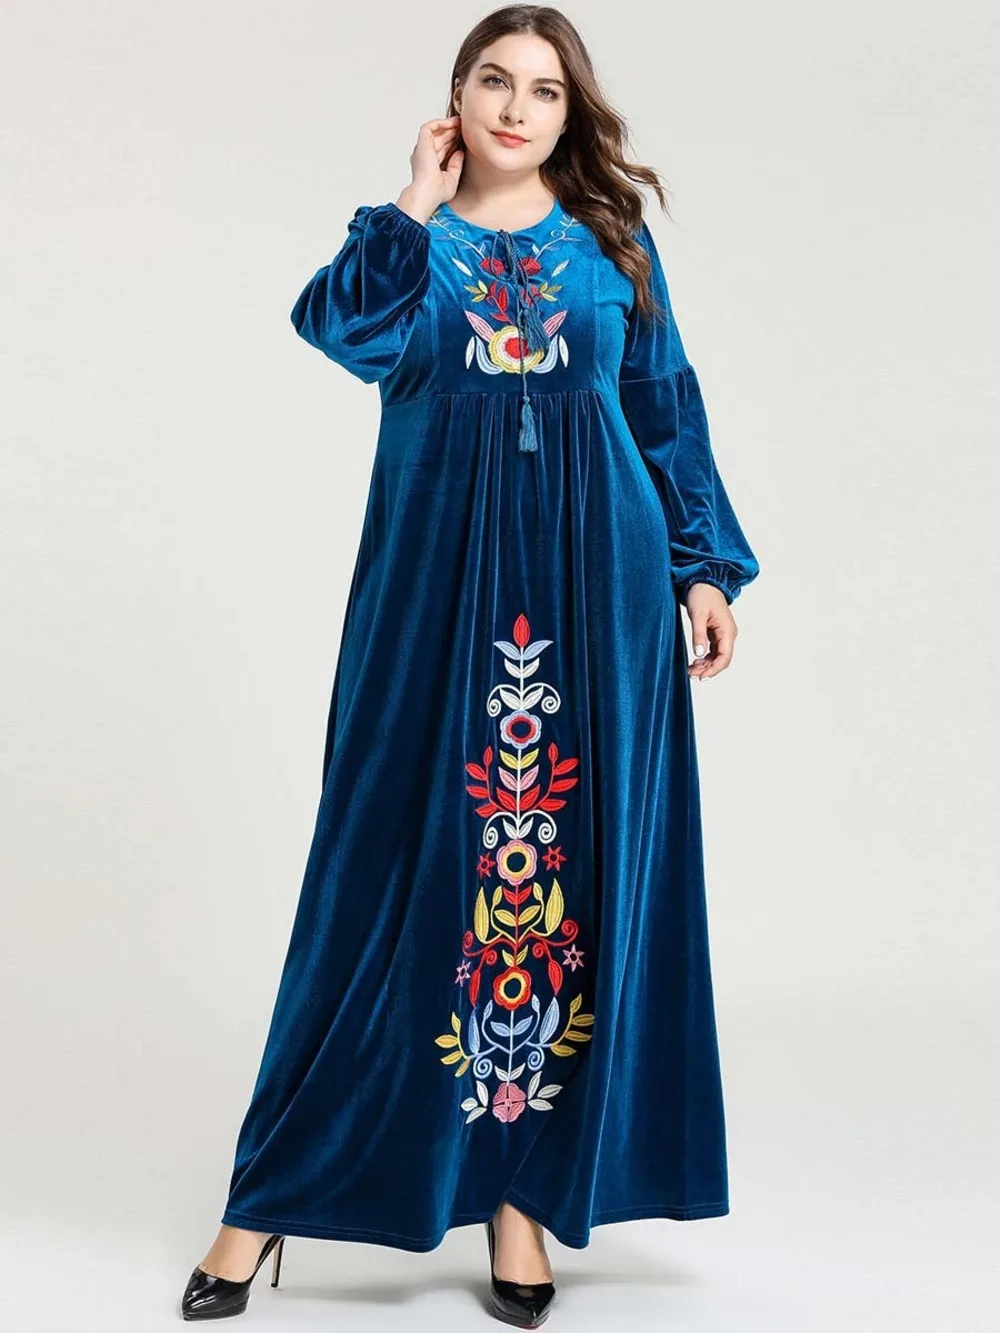 New Hijab Muslim Abaya Dress For Women Islamic Dresses Dubai Elegant Evening | Тематическая одежда и униформа